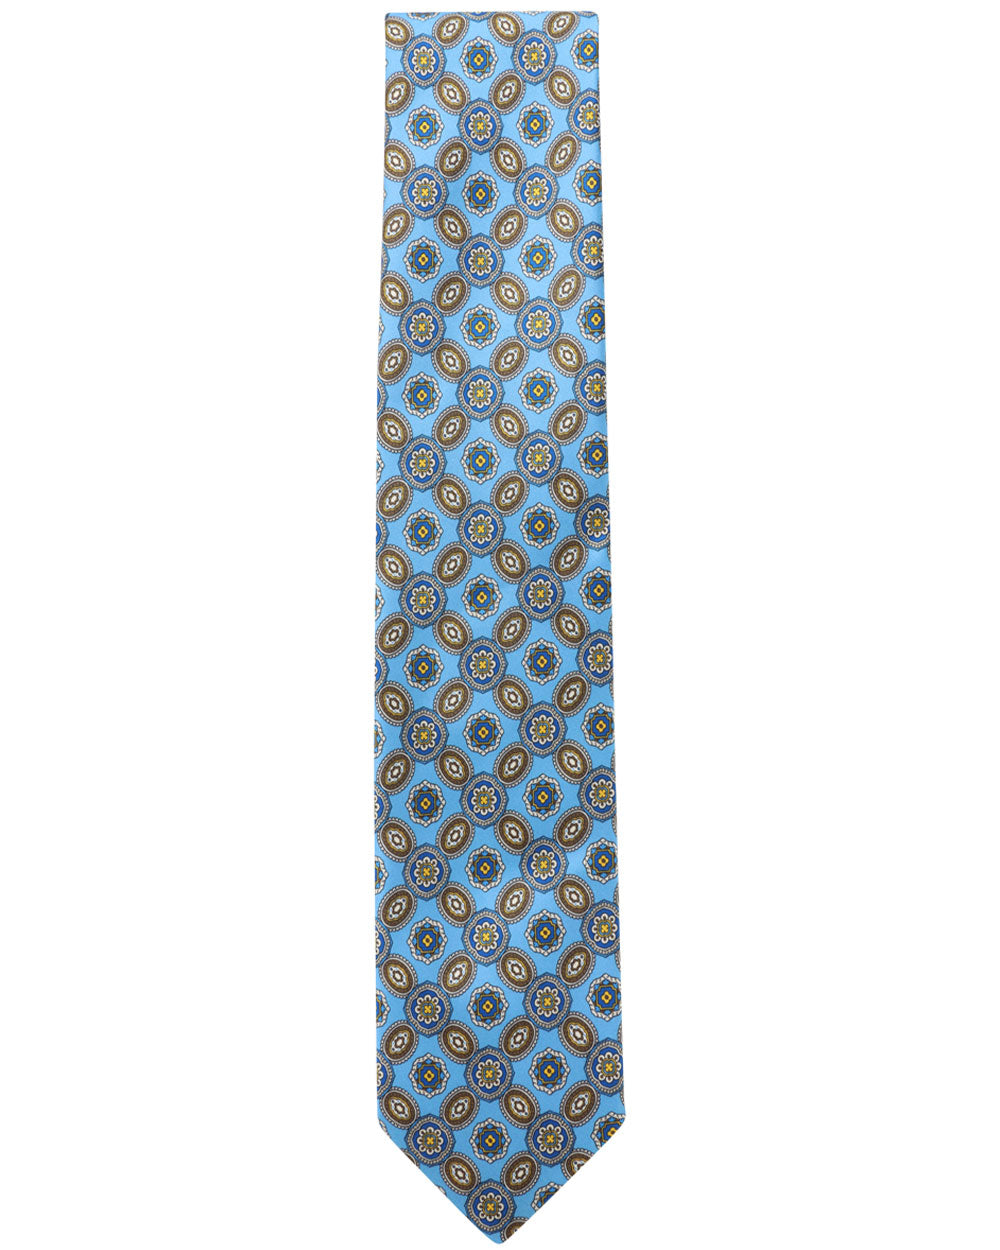 Light Blue and Brown Medallion Silk Tie